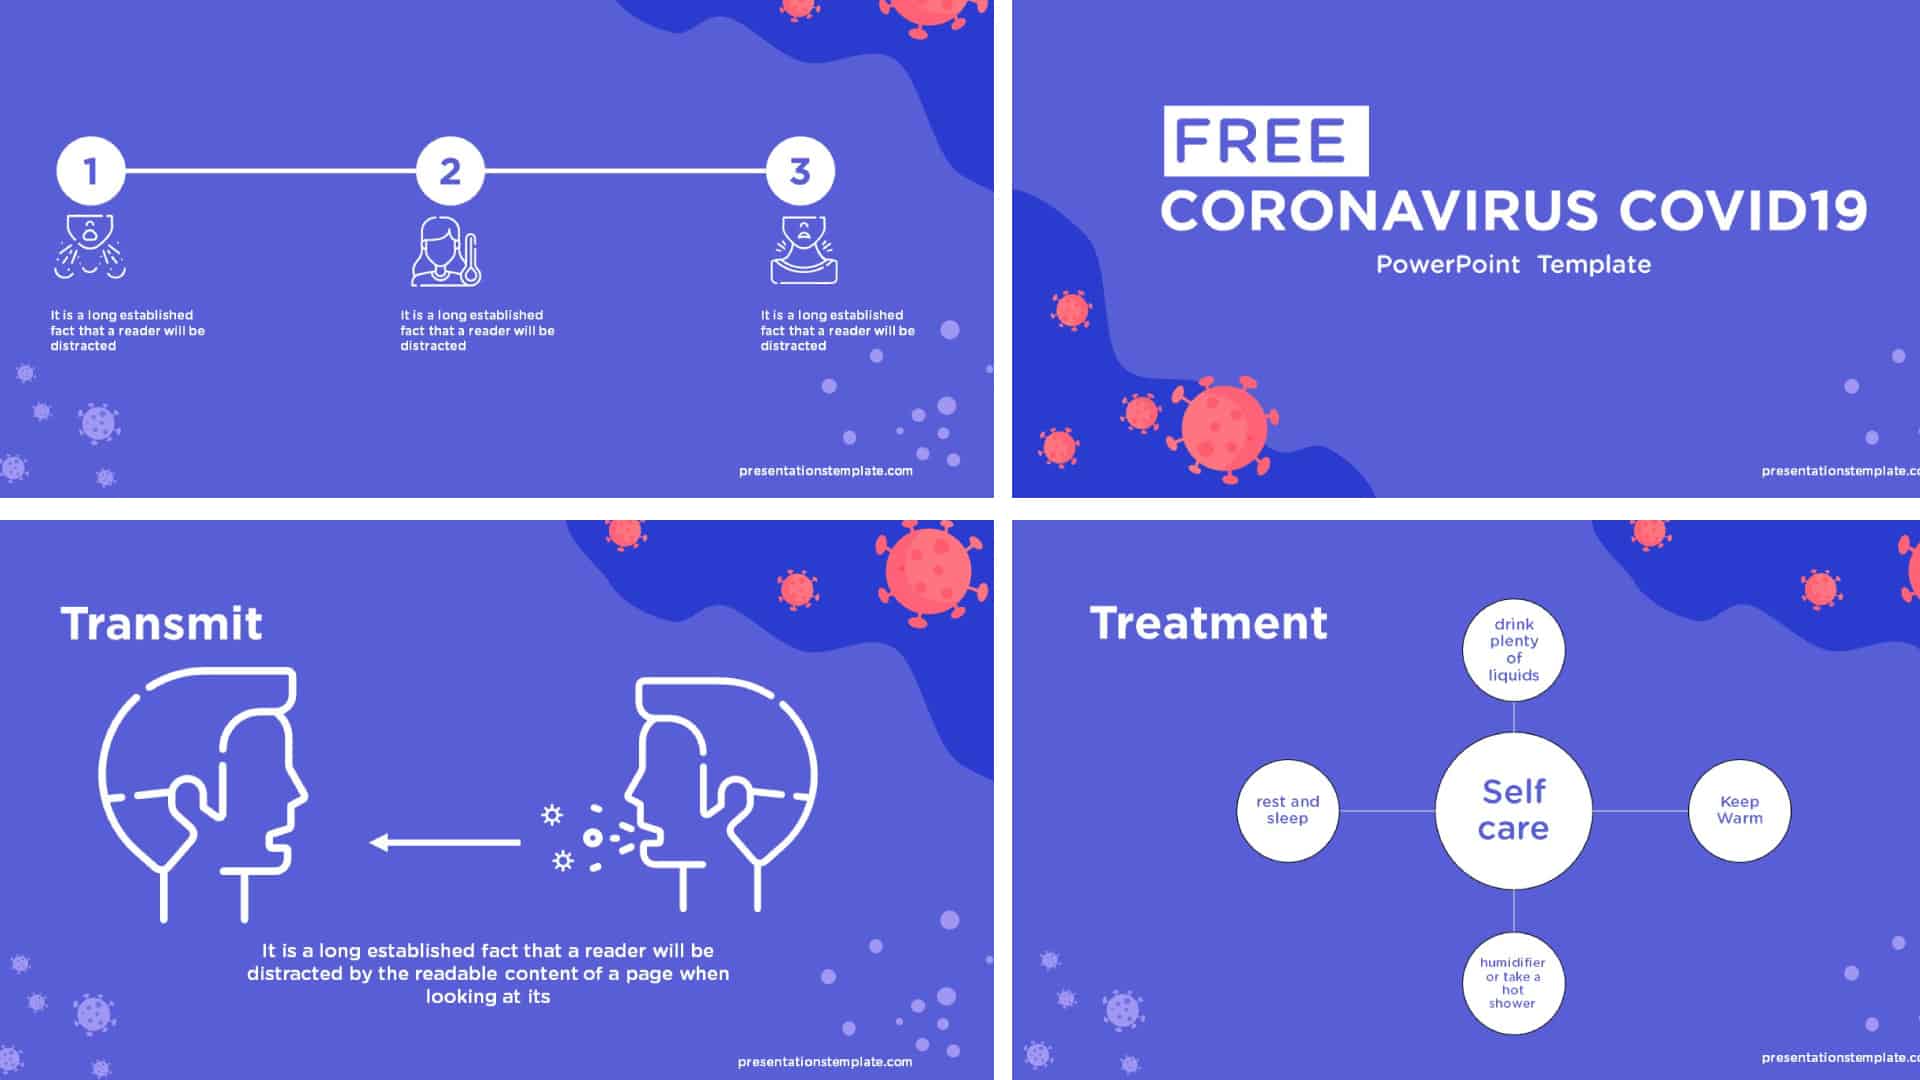 covid-19-coronavirus-pptx-template-download-free-presentations-template